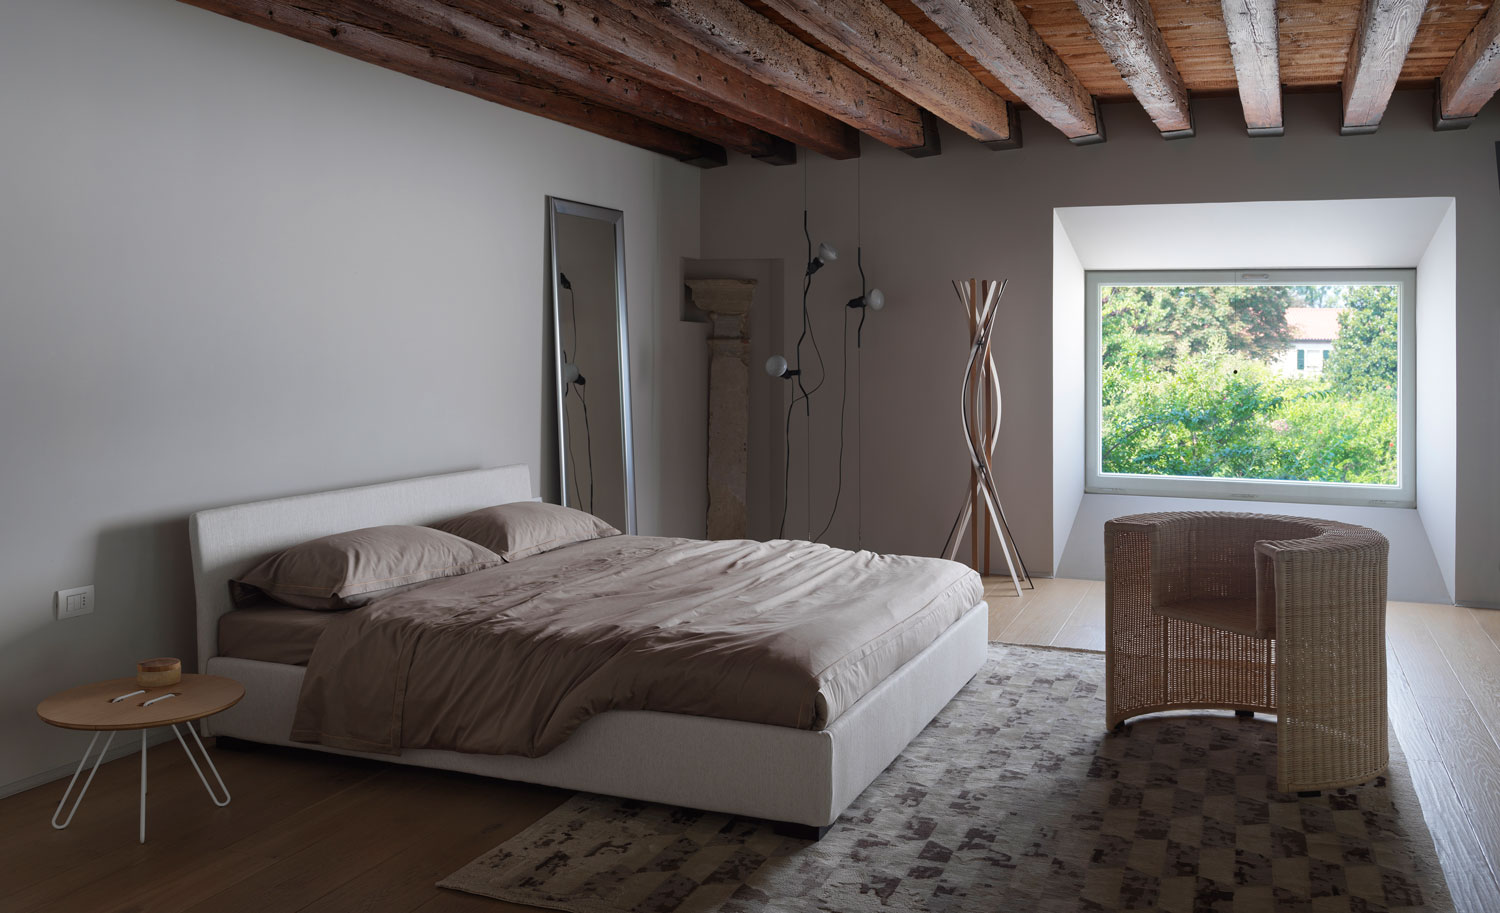 Figi bed in a bedroom